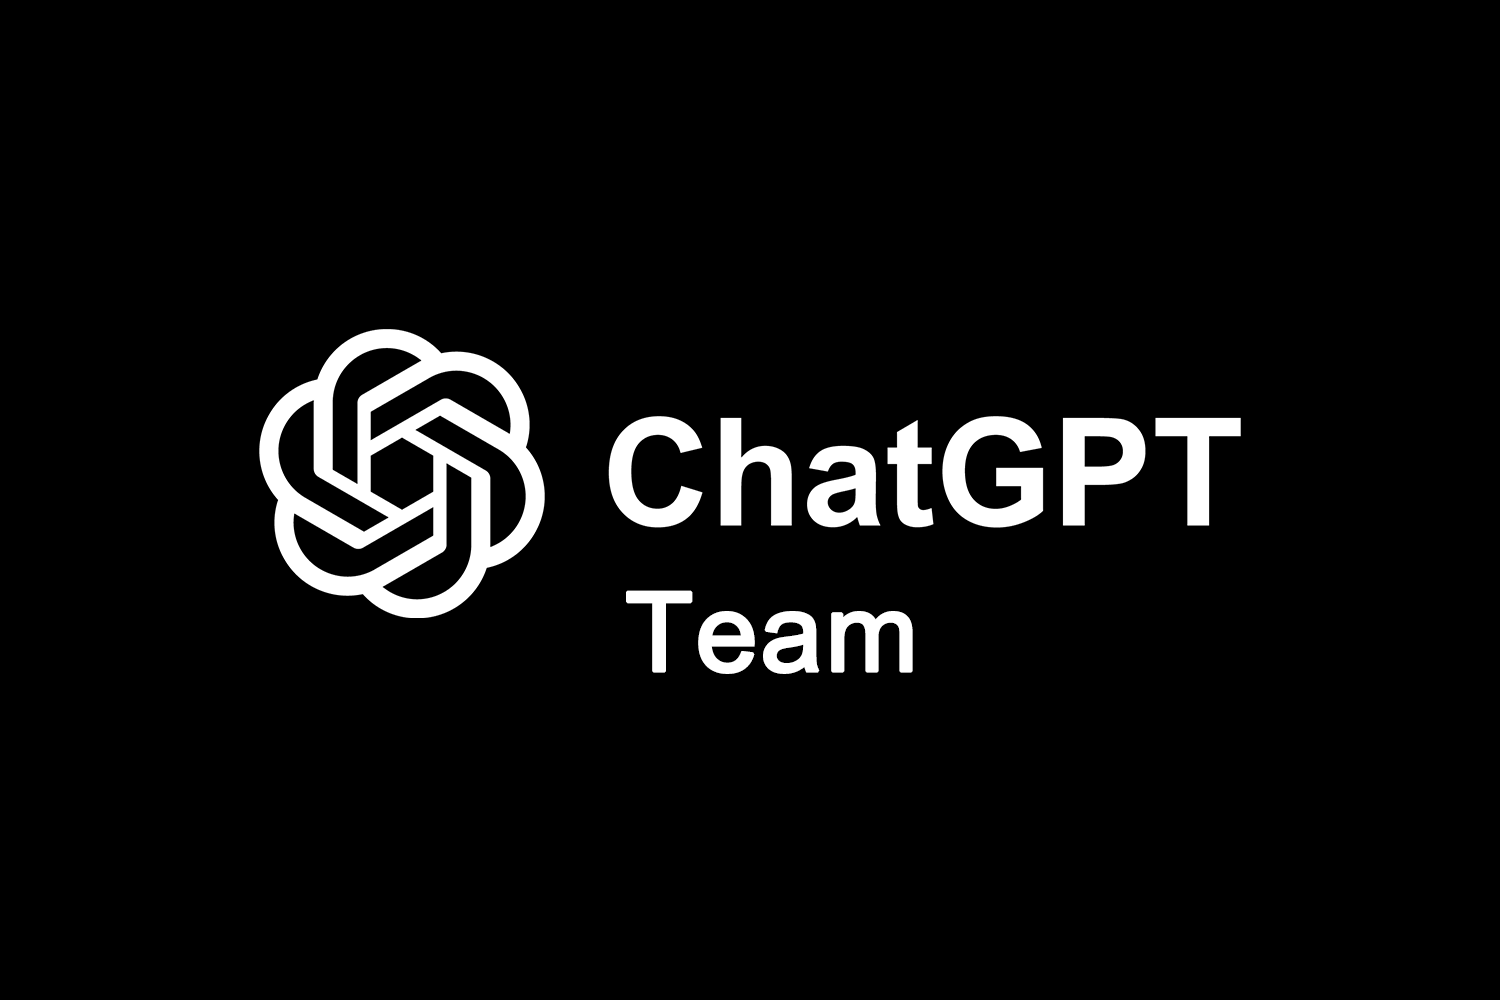 ChatGPT Team